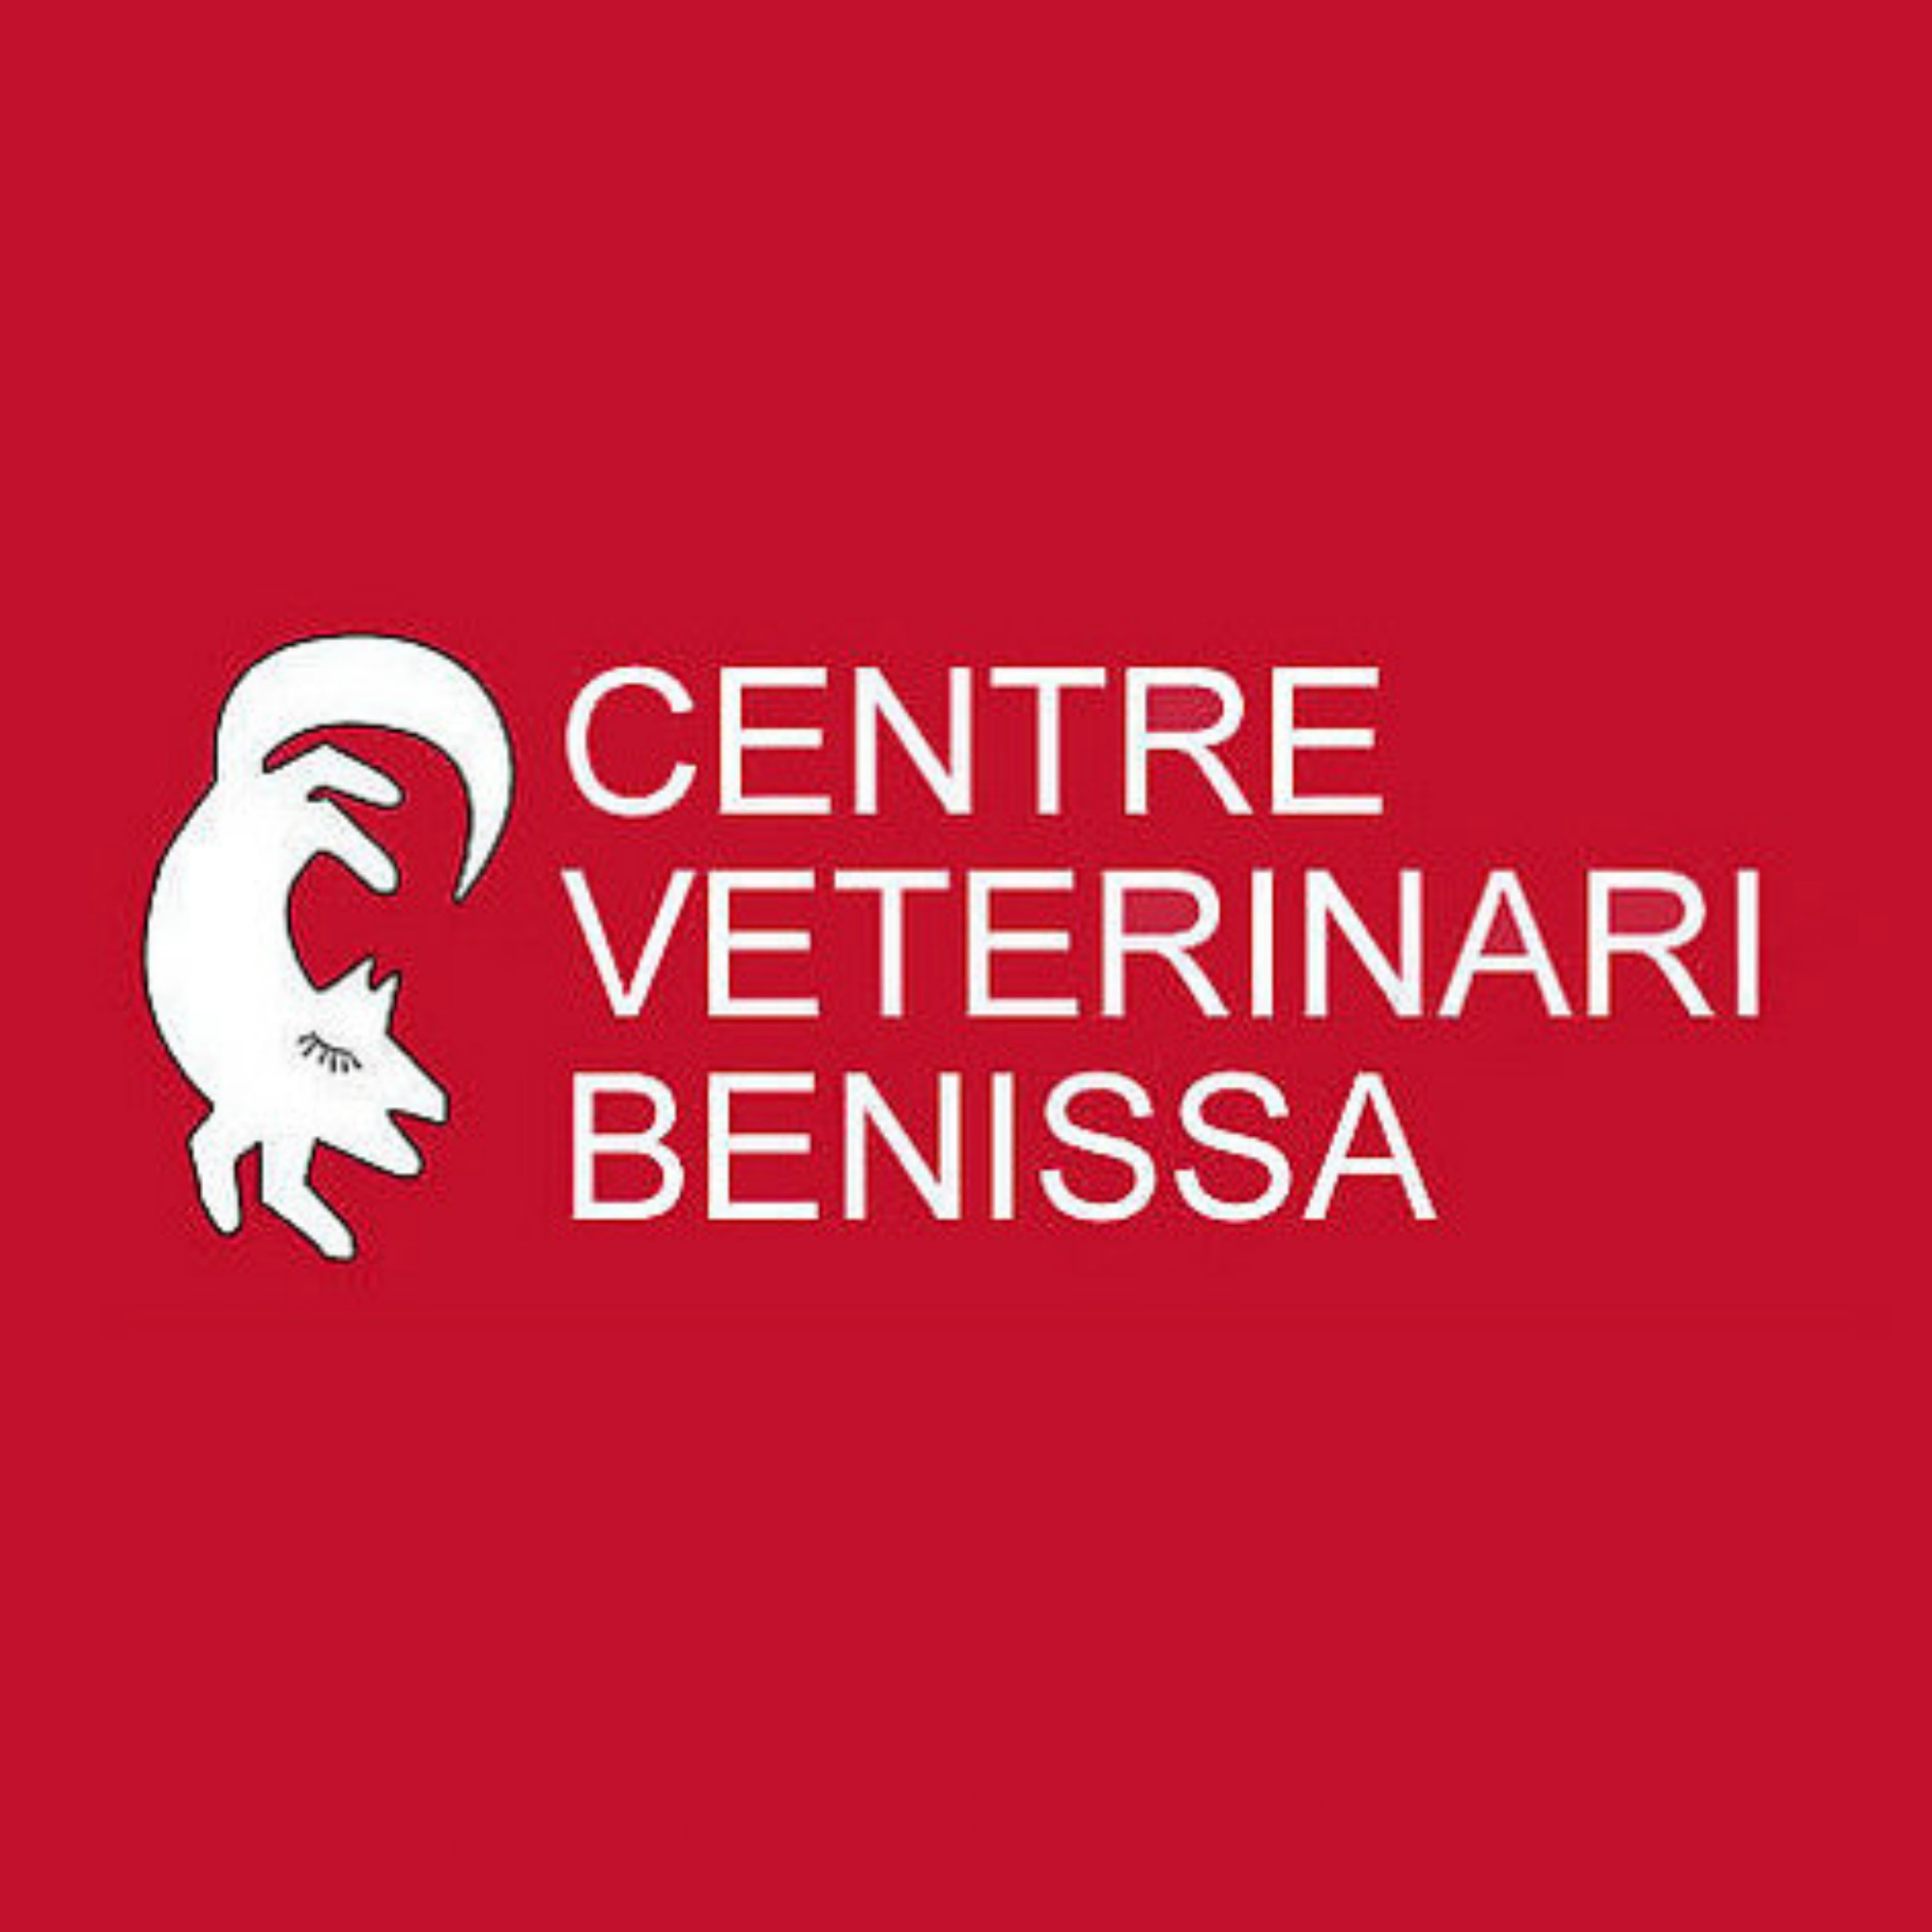 Centre Veterinari Benissa S.L.